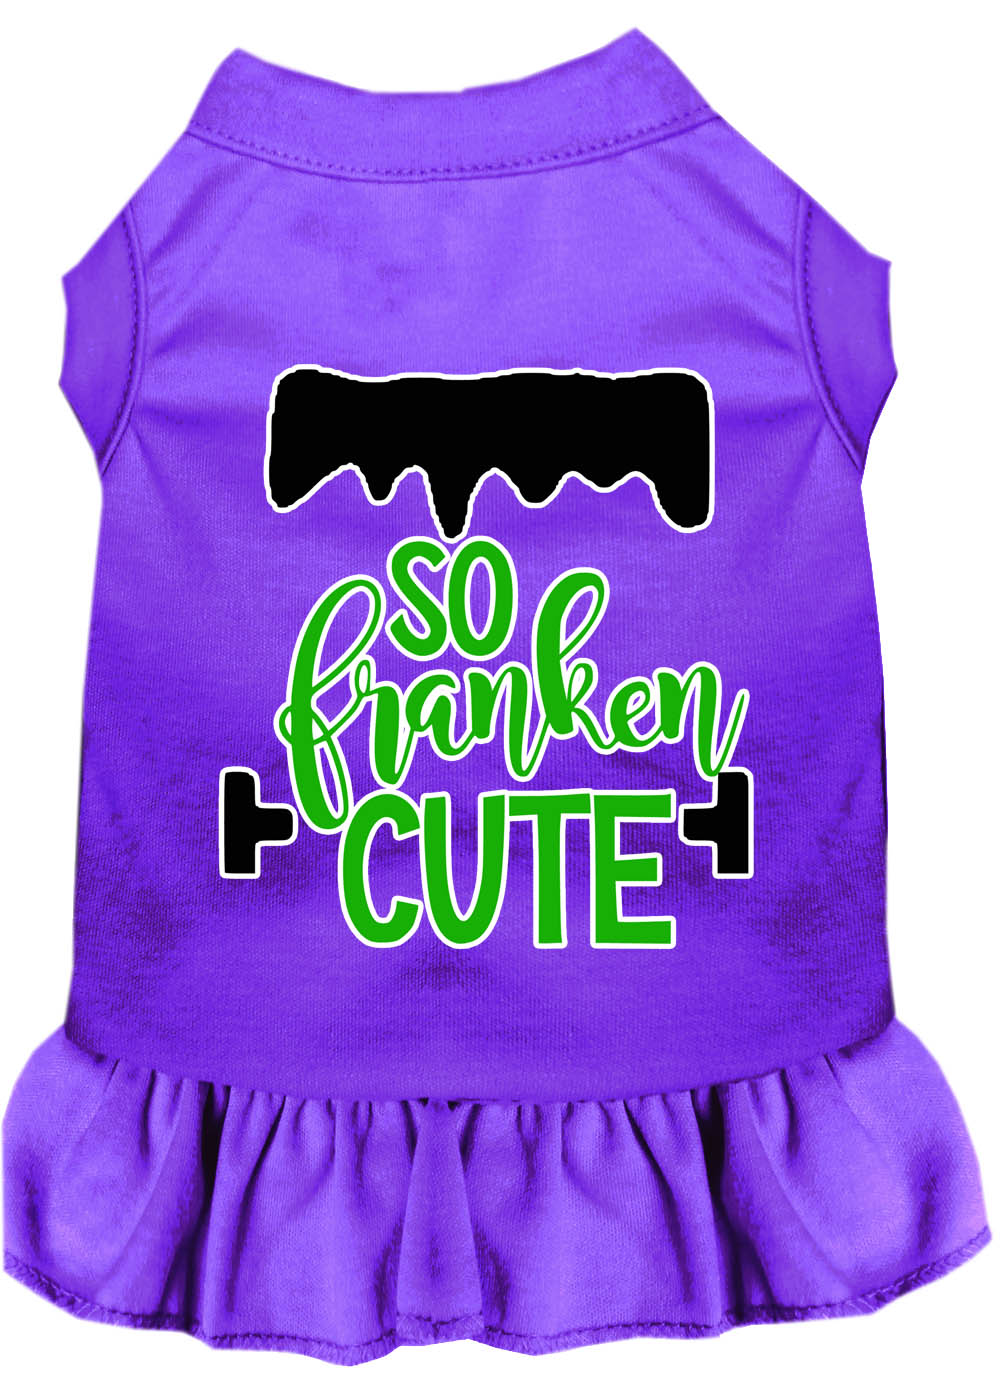 So Franken Cute Screen Print Dog Dress Purple 4X